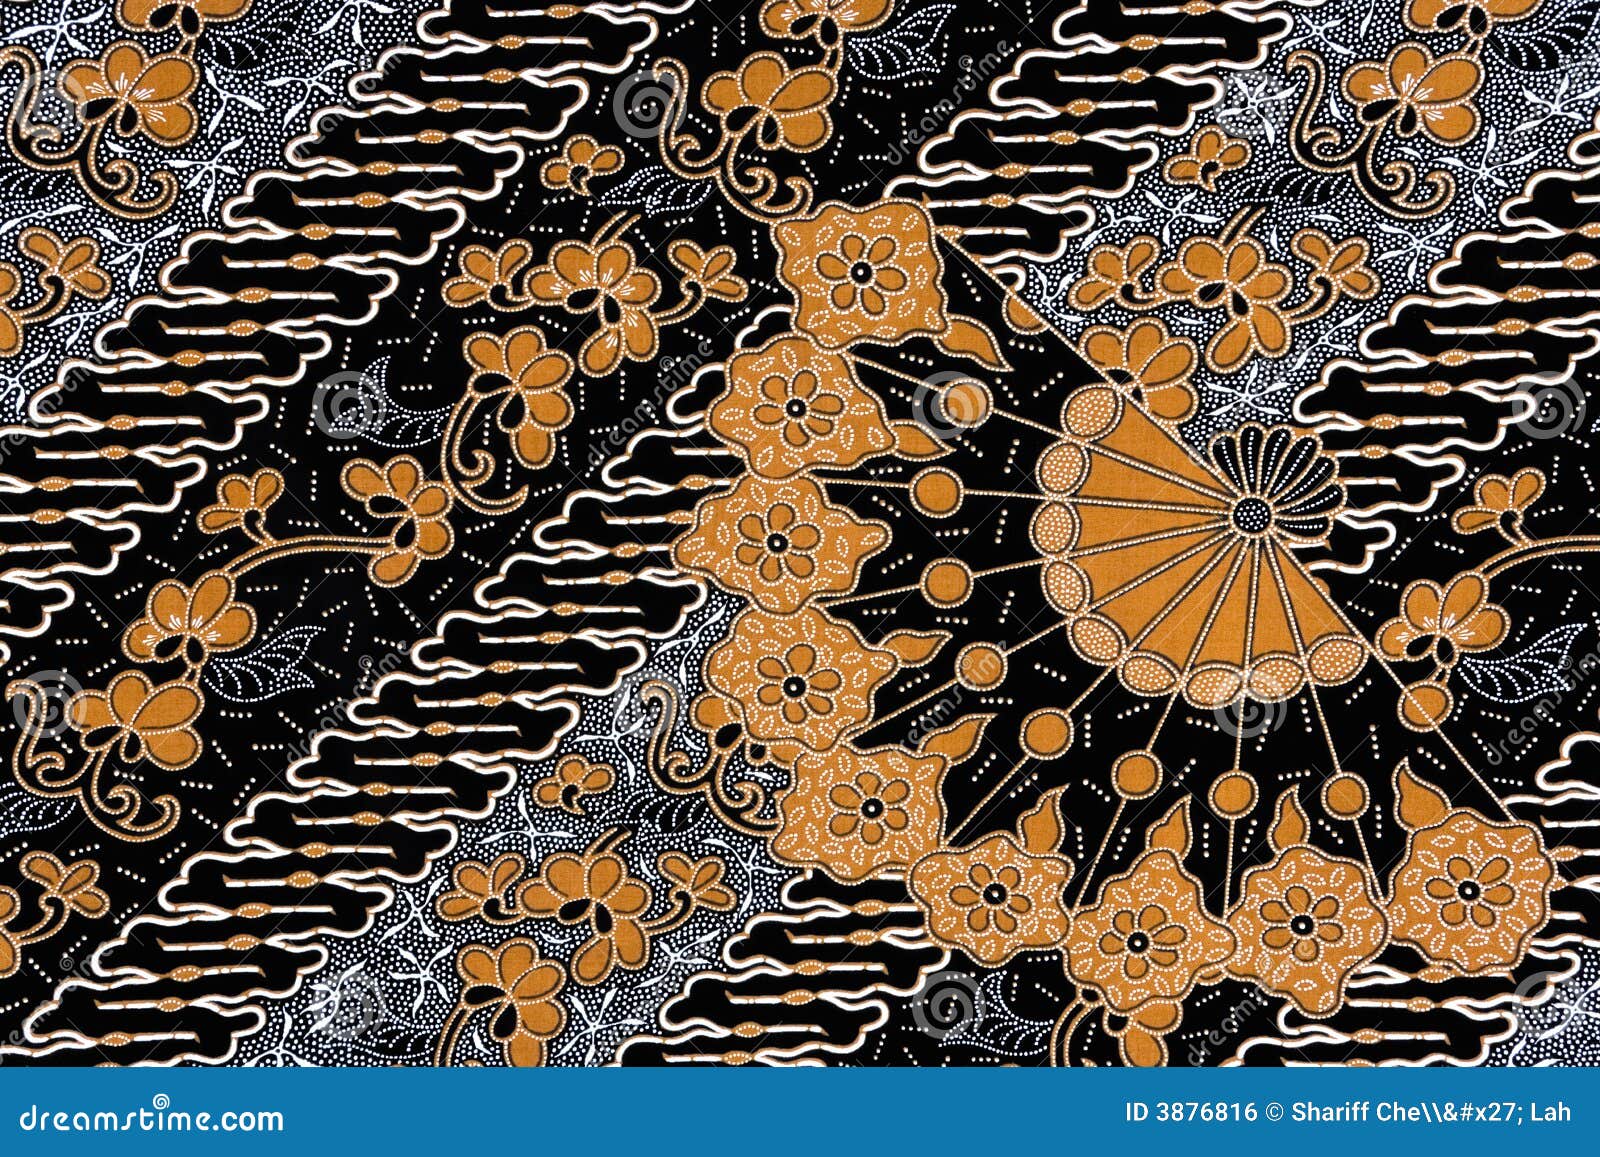  Indonesian  Batik  Sarong Royalty Free Stock Image  Image  